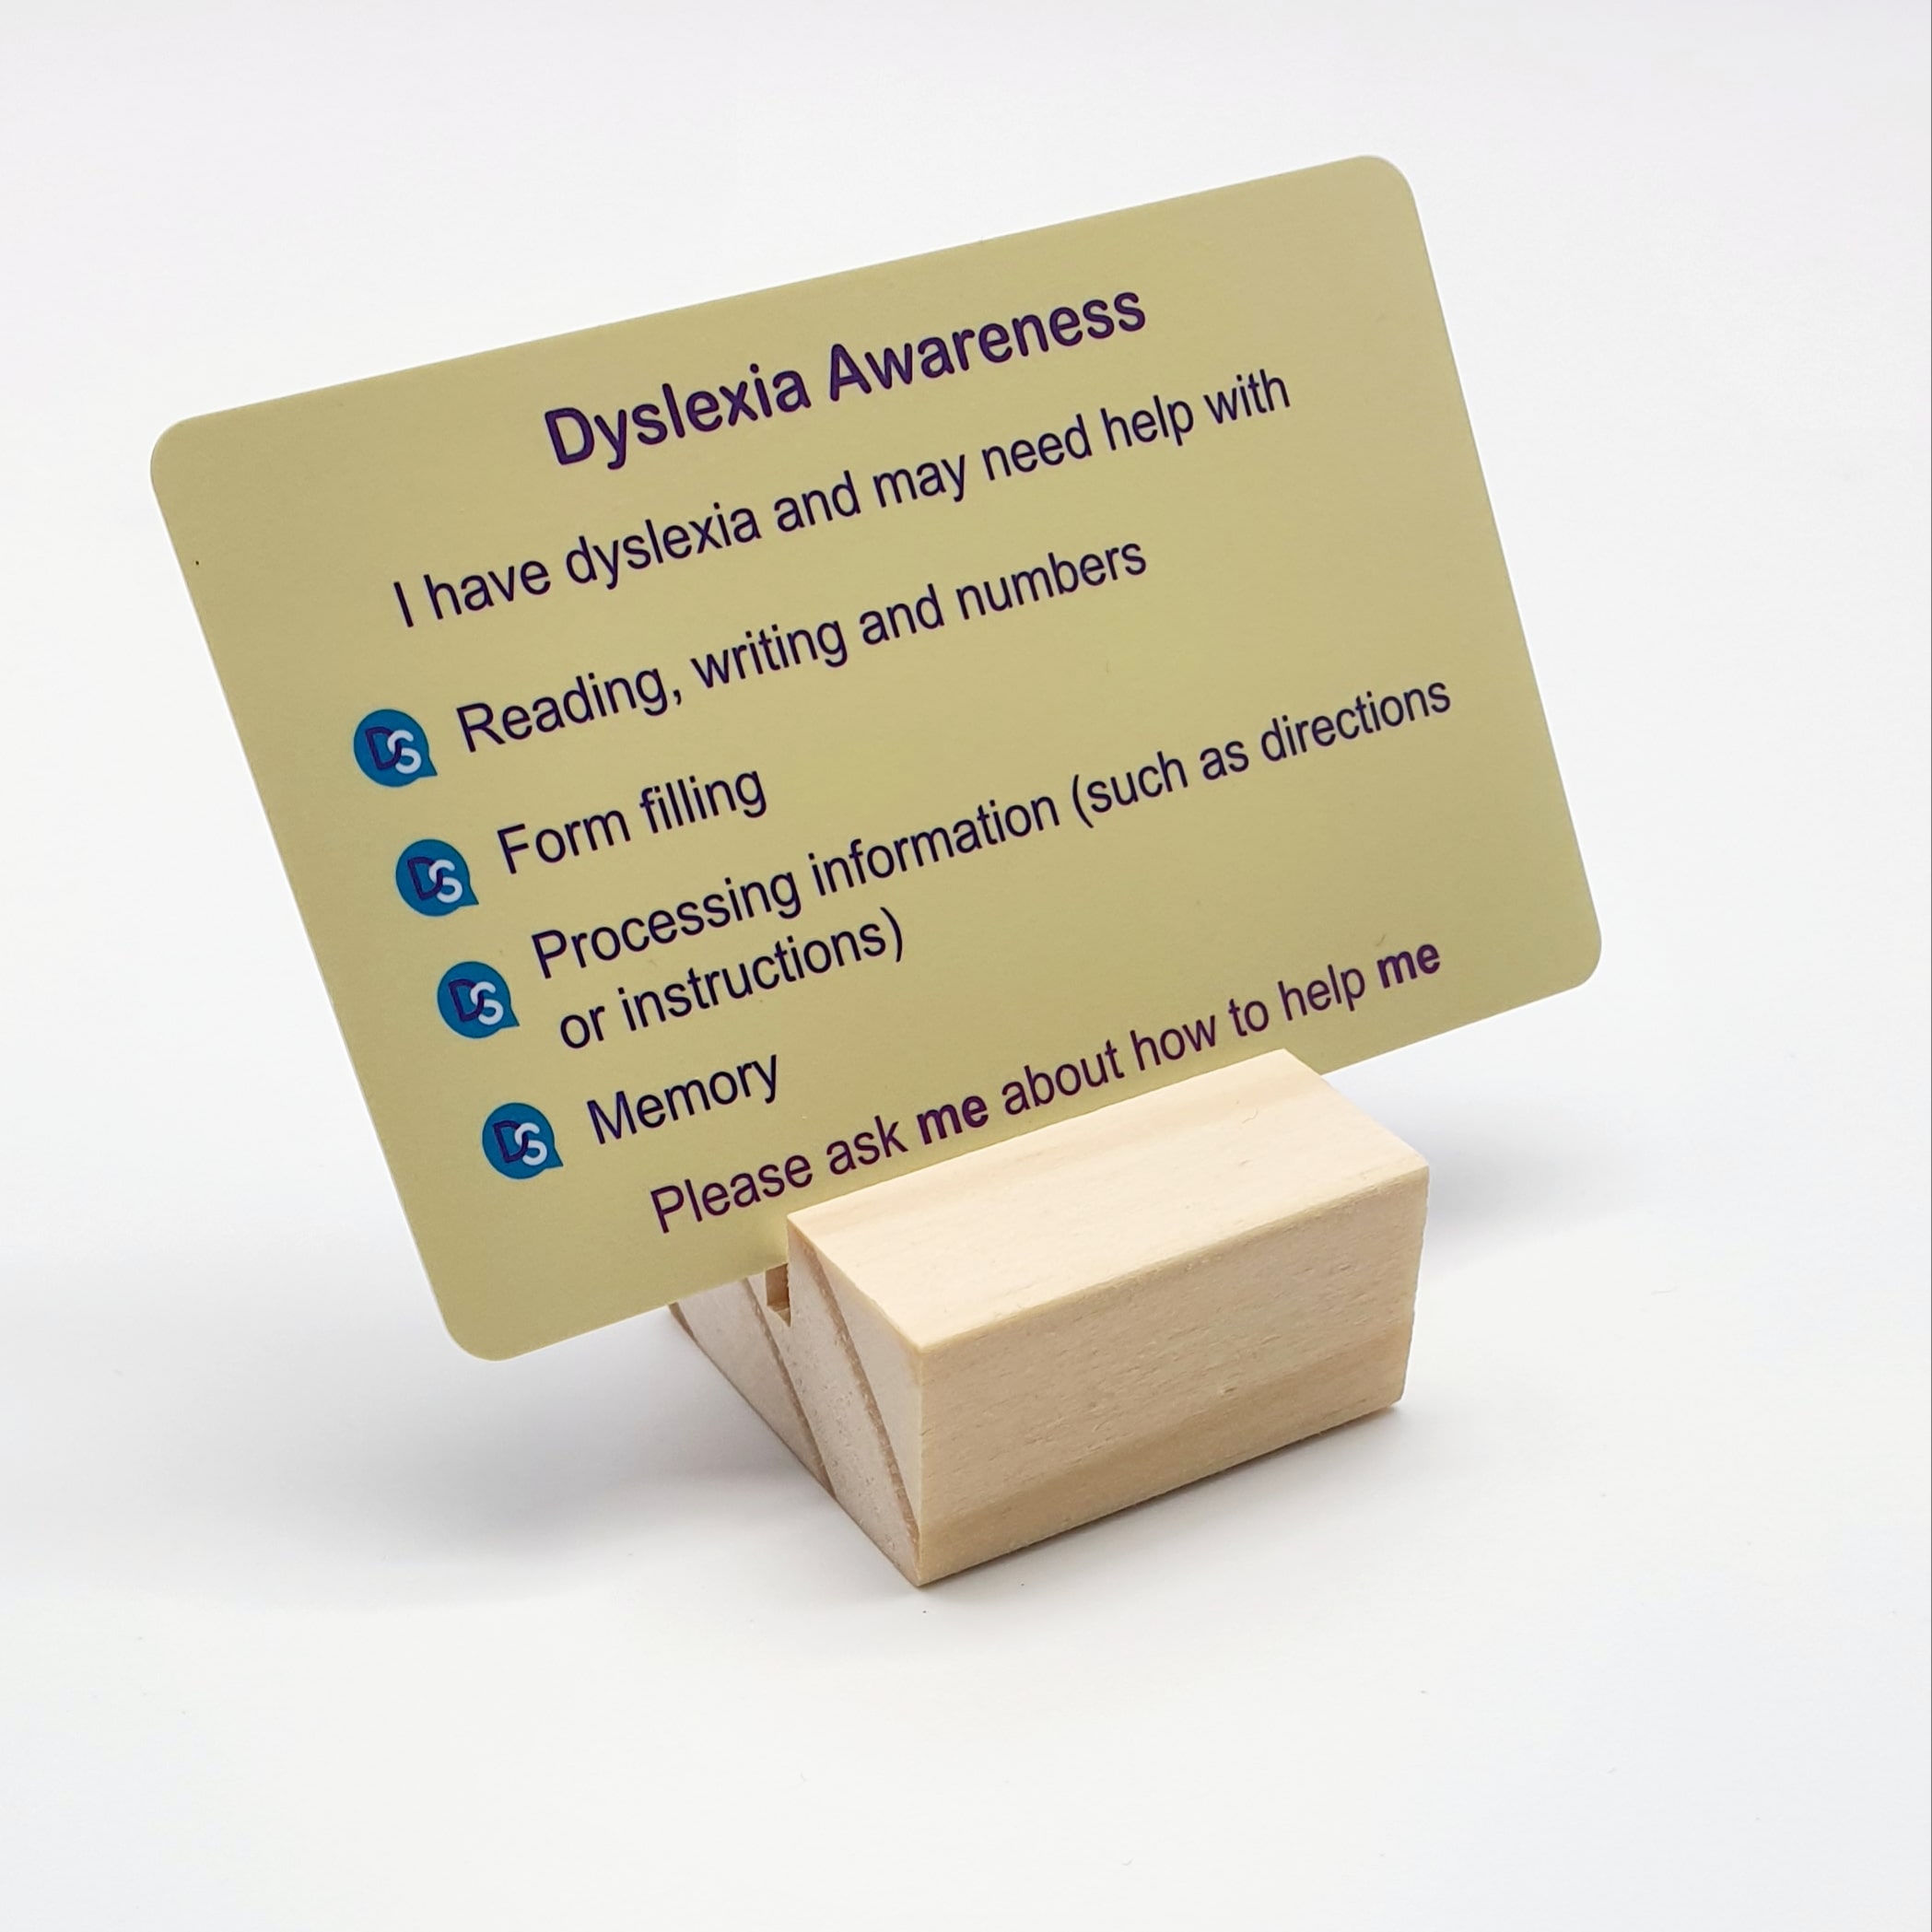 Dyslexia awareness card